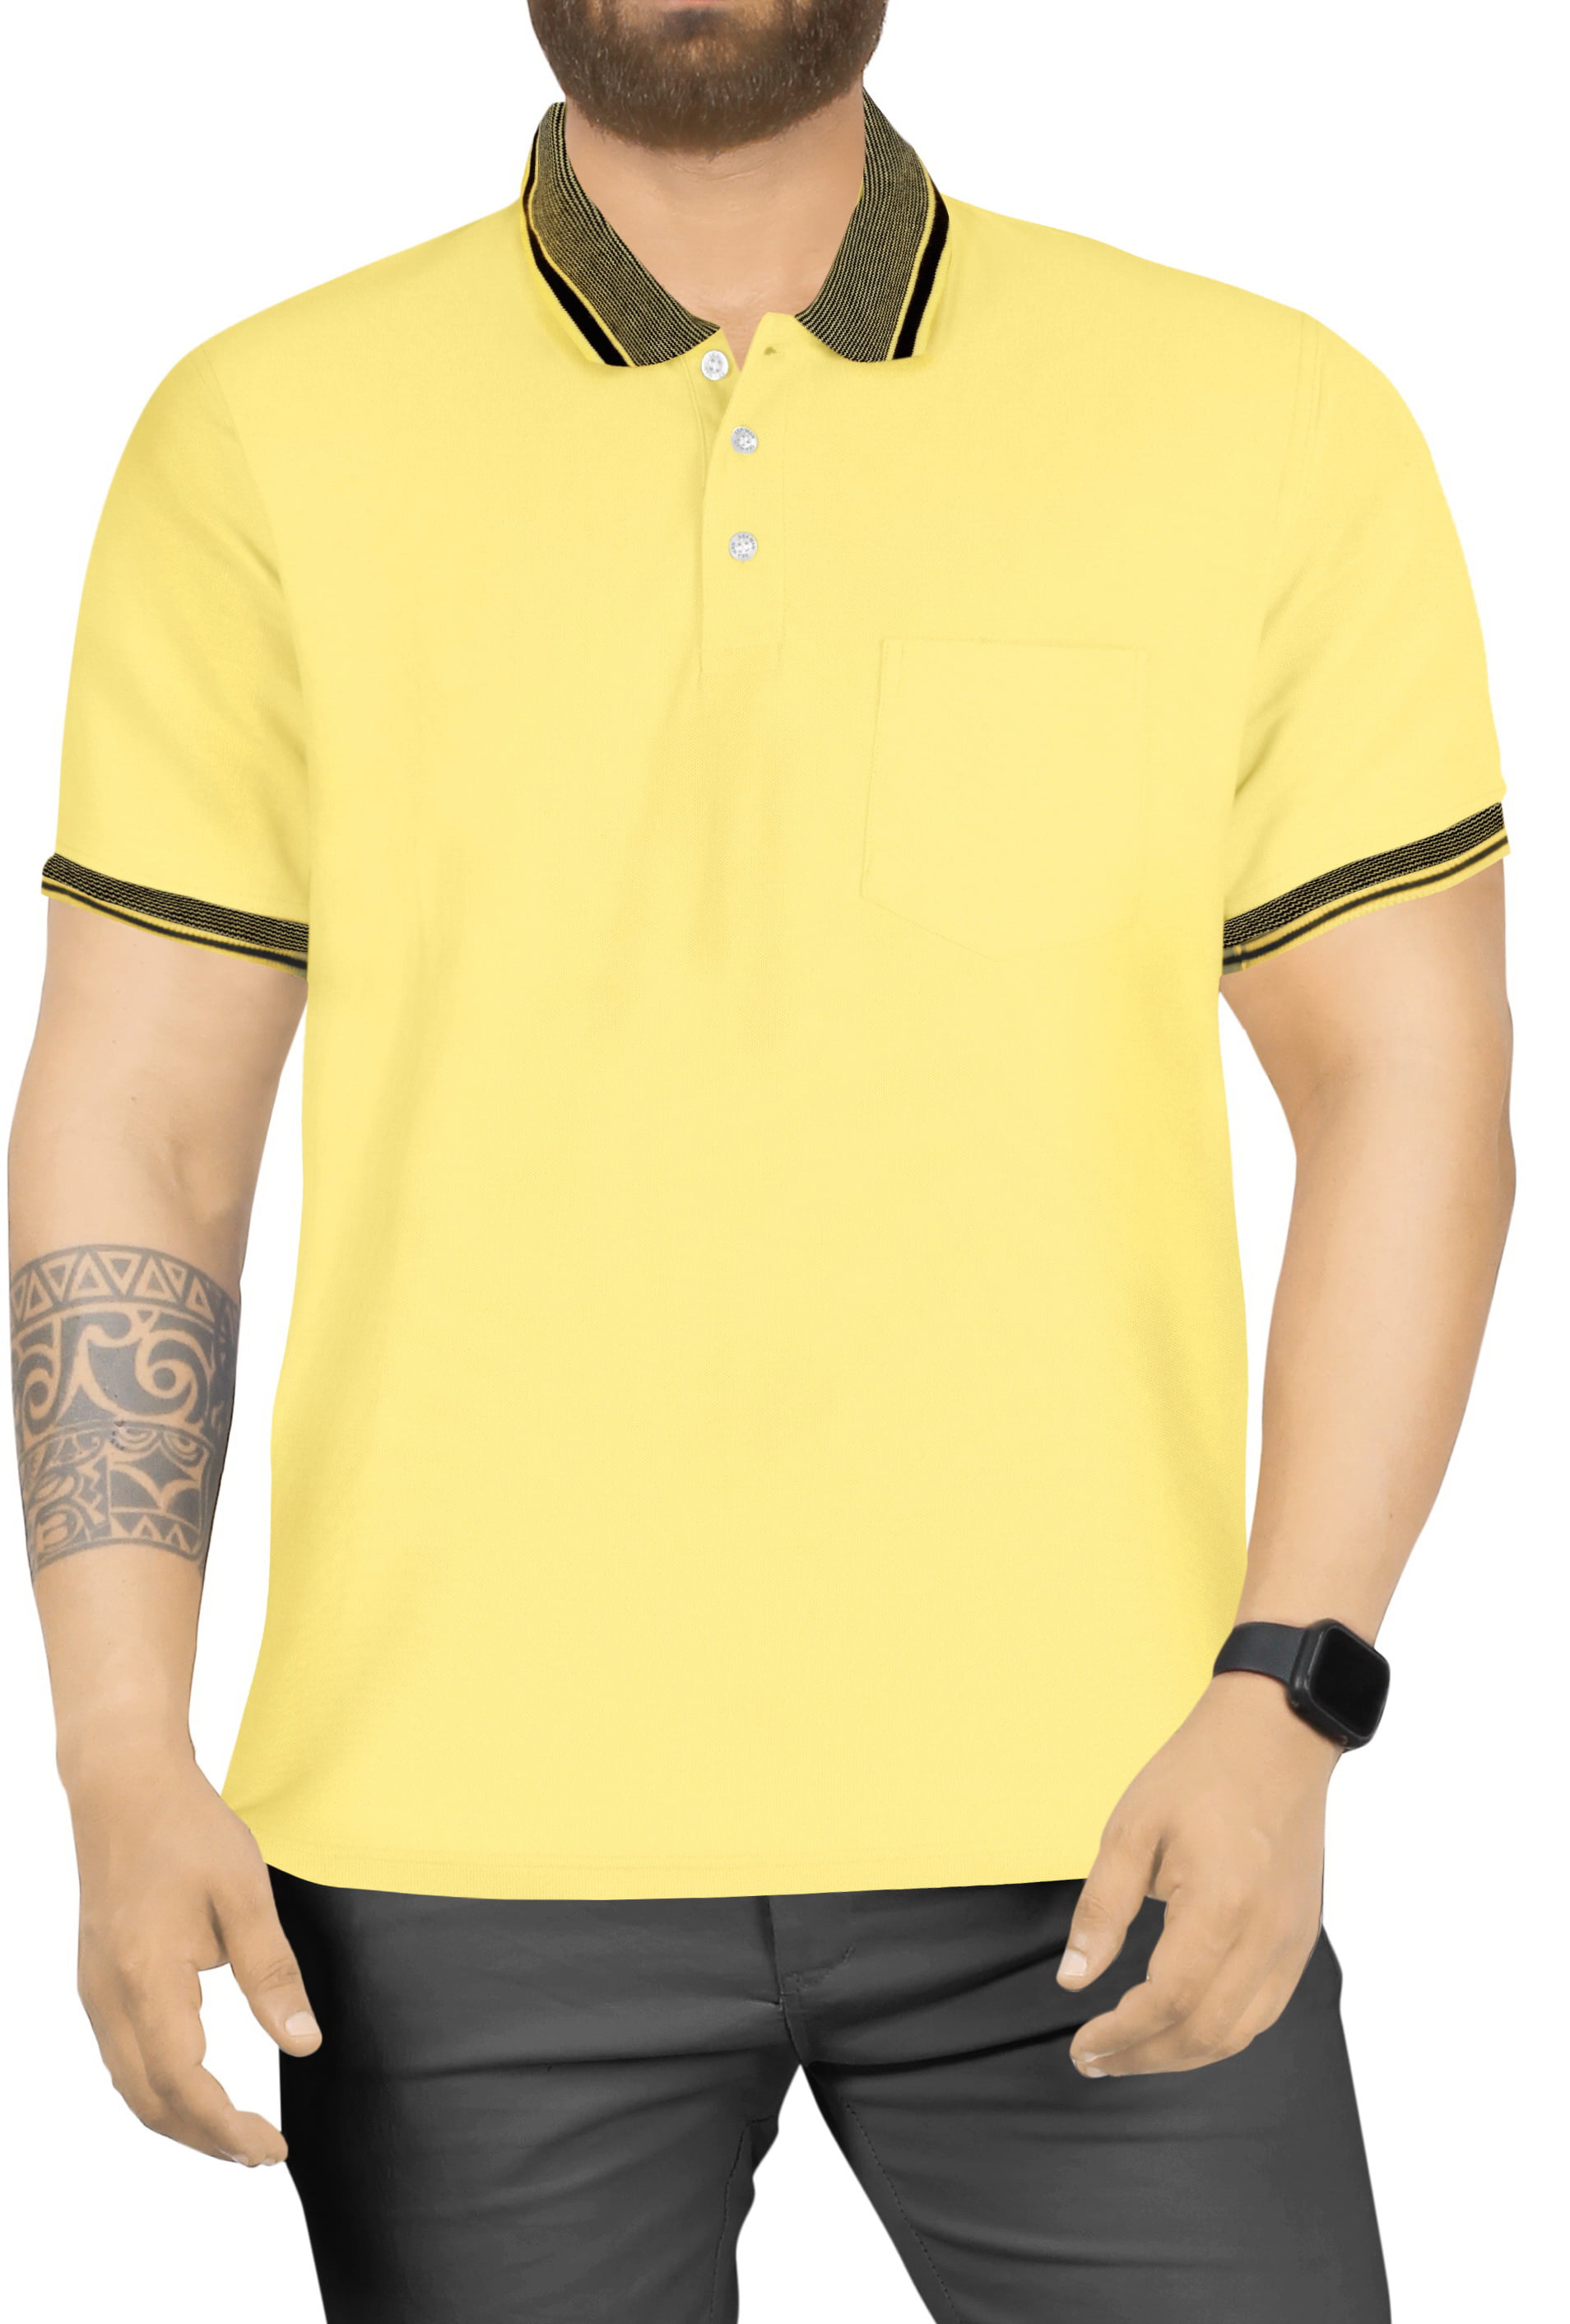 At øge Hysterisk killing LEELA Men's Classic Fit Short Sleeve Solid Soft Cotton Polo Shirt S Yellow  - Walmart.com